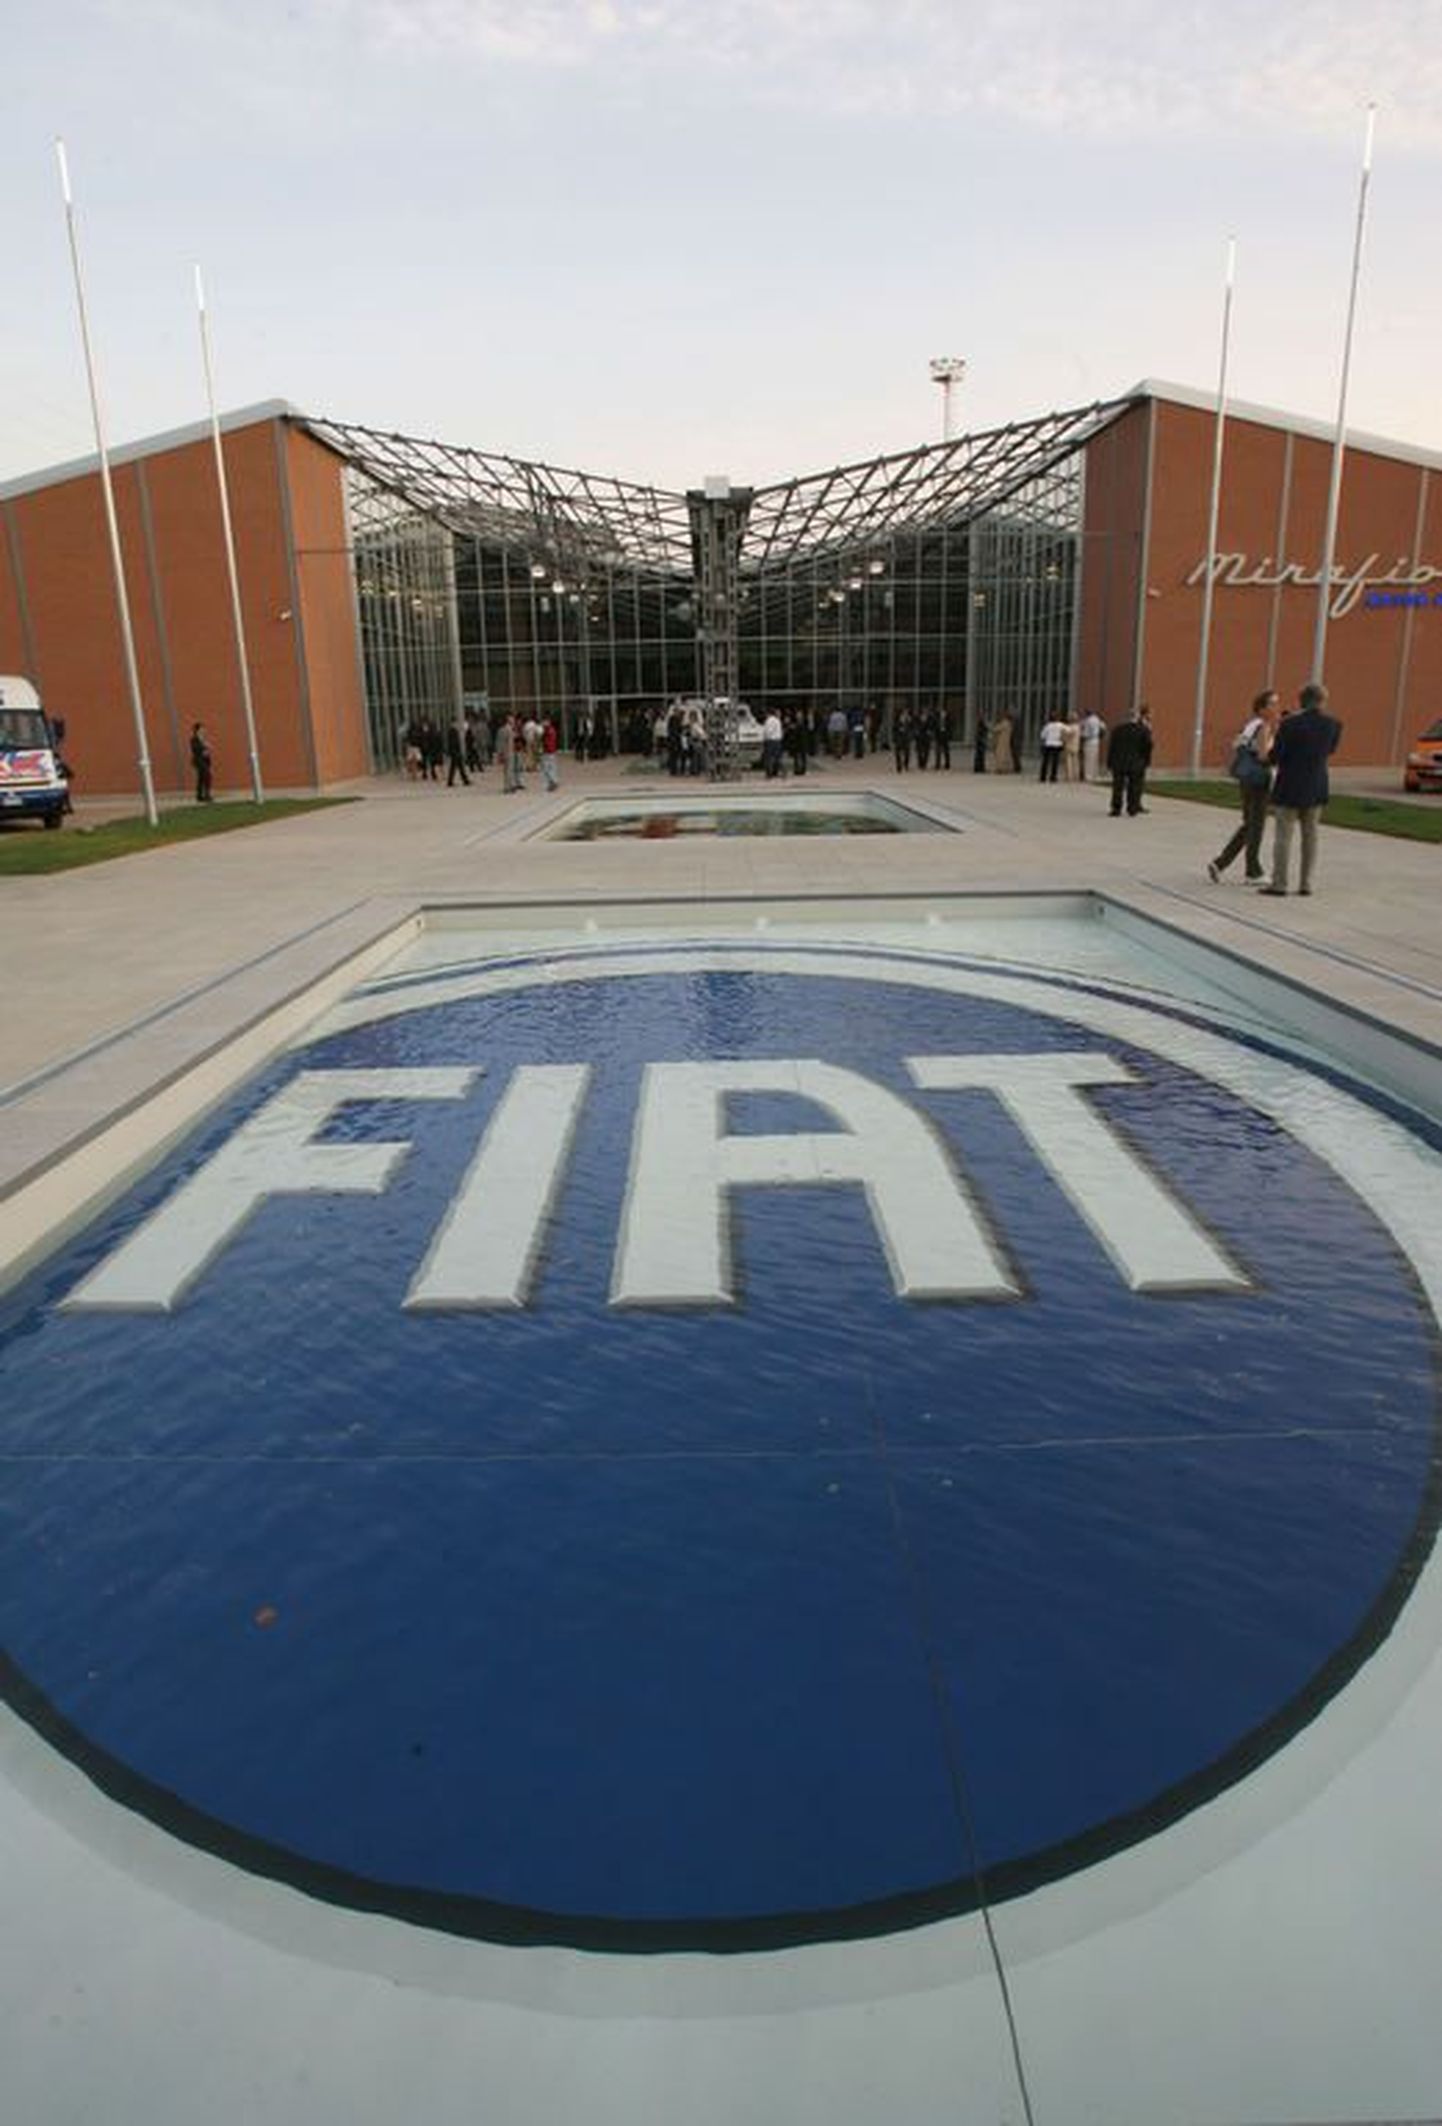 Fiati tehas Itaalias Torinos.